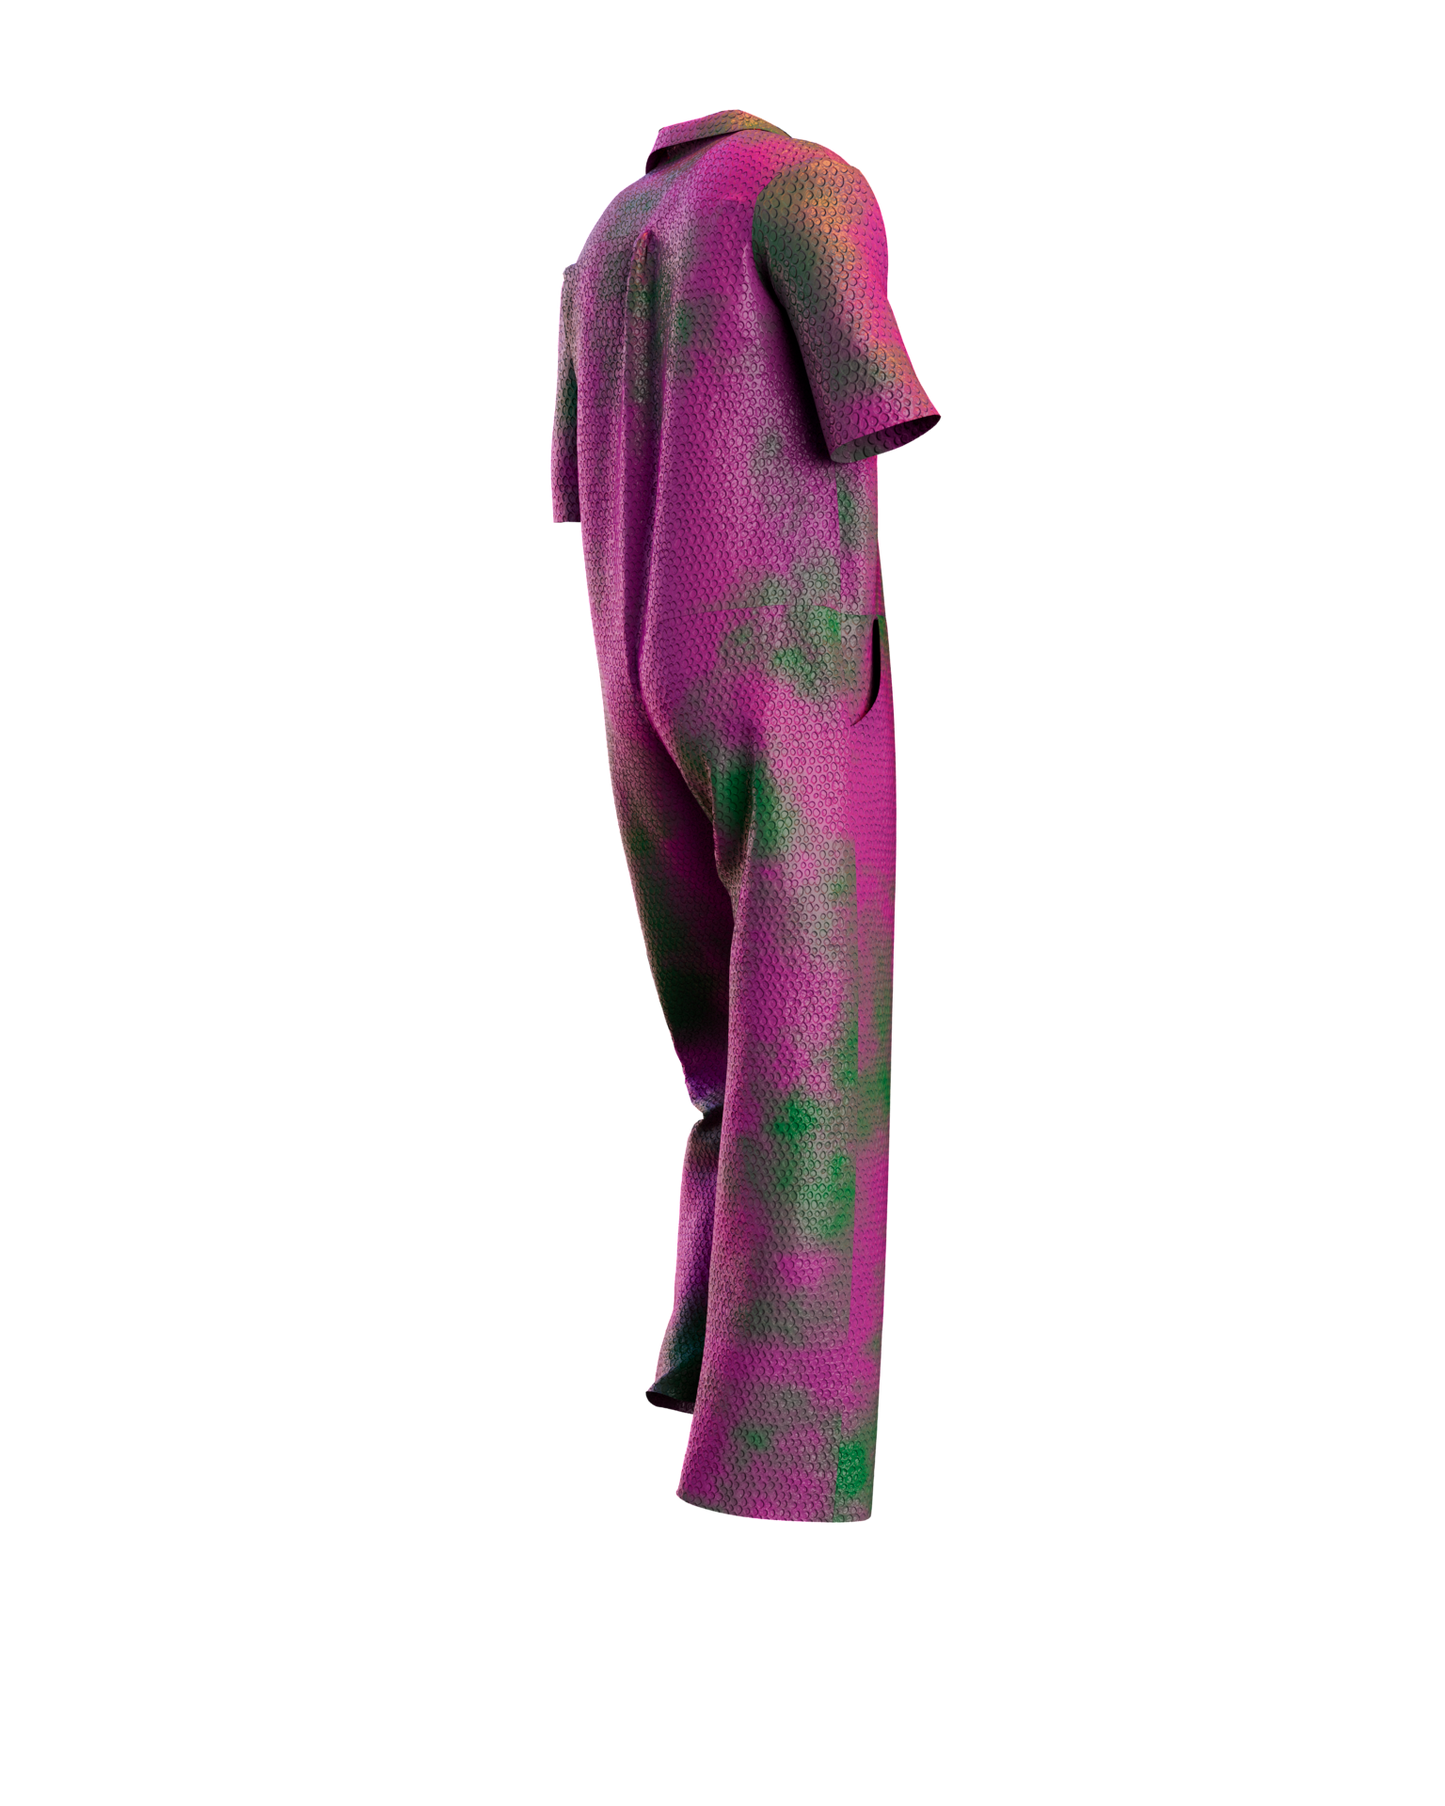 Pink Snake Print Jumpsuit